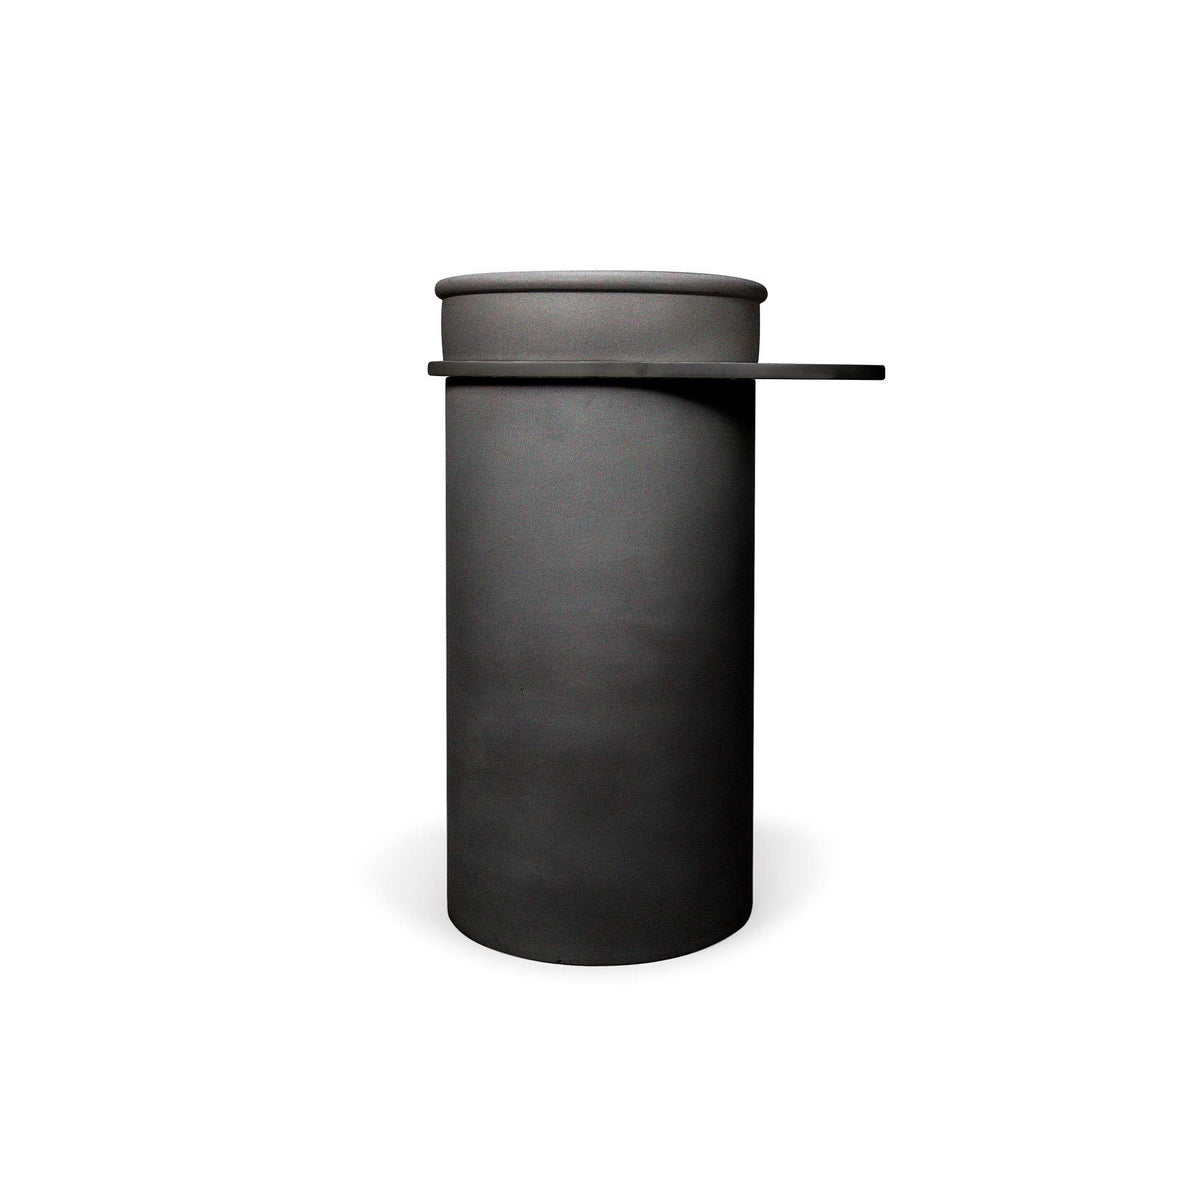 Cylinder - Tubb Basin (Charcoal)